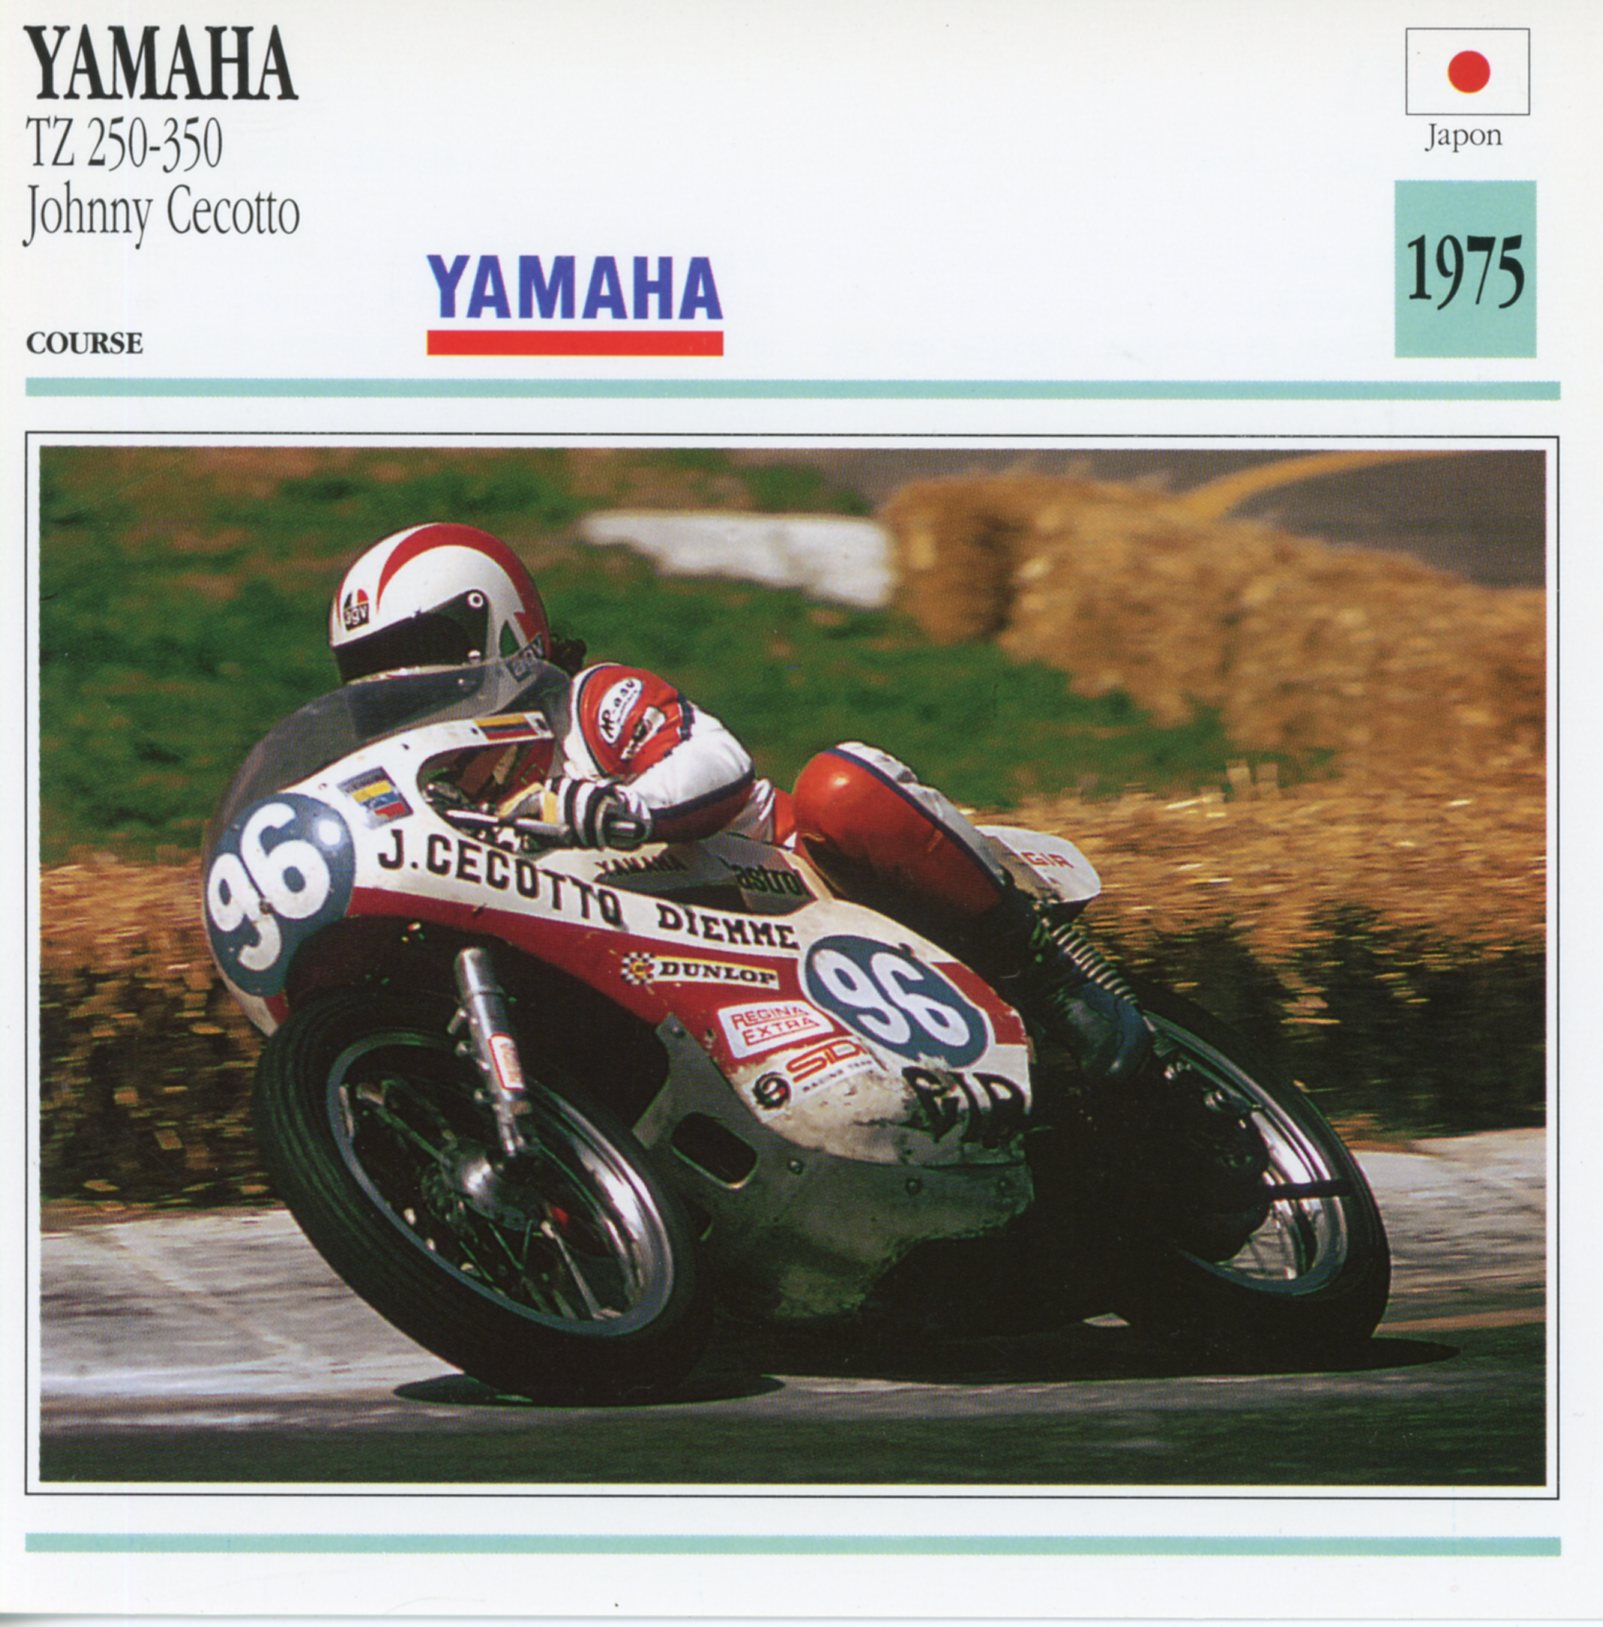 FICHE-MOTO-YAMAHA-TZ-250-350-JOHNNy-CECOTTO-1975-LEMASTERBROCKERS-littérature-brochure